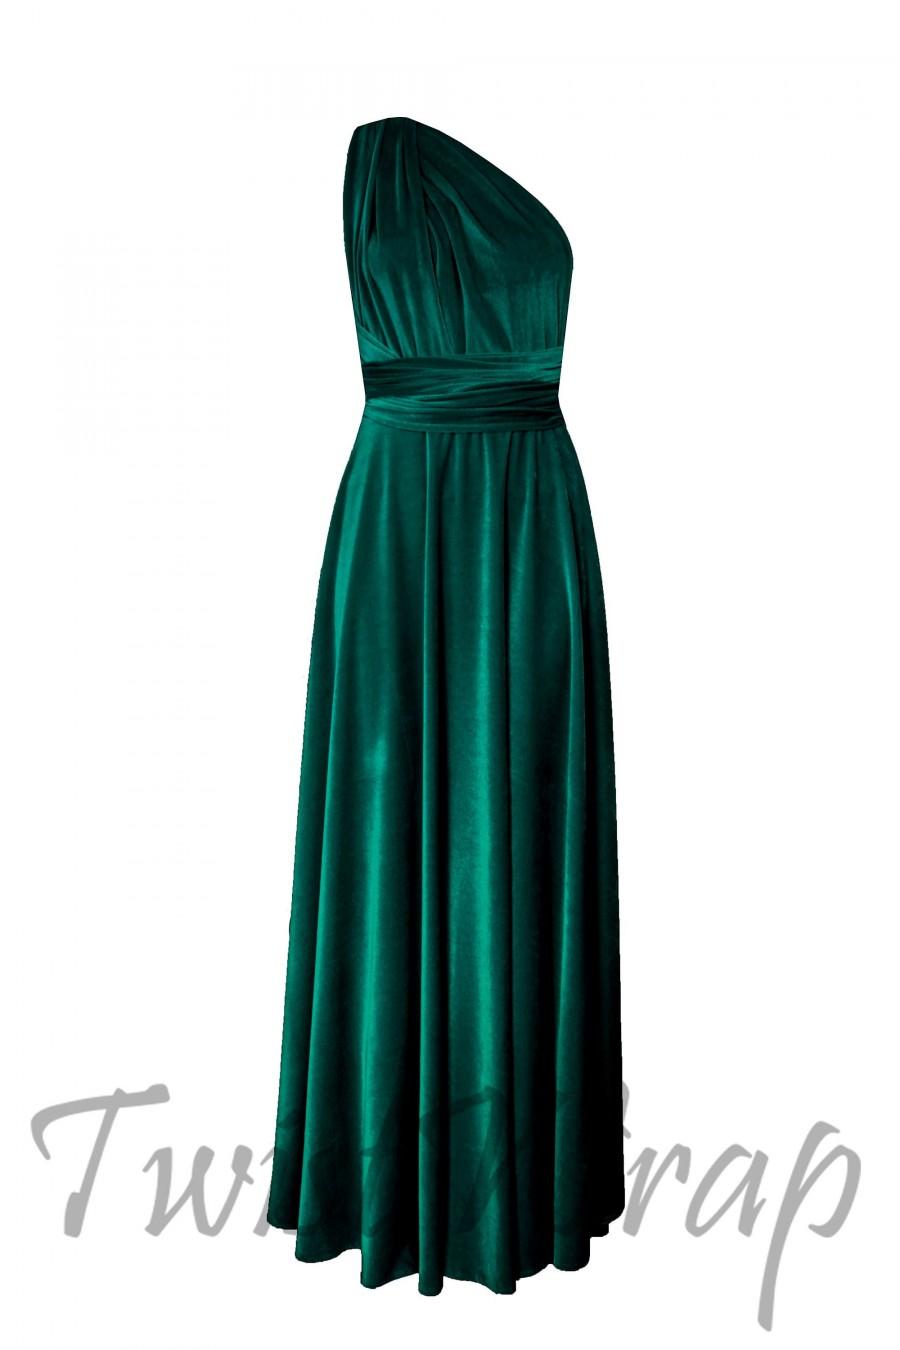 Mariage - Velvet Dress Dark Green Infinity Dress Bridesmaids Dress Long Convertible Dress Formal Maternity Dress Plus Size Prom Dress